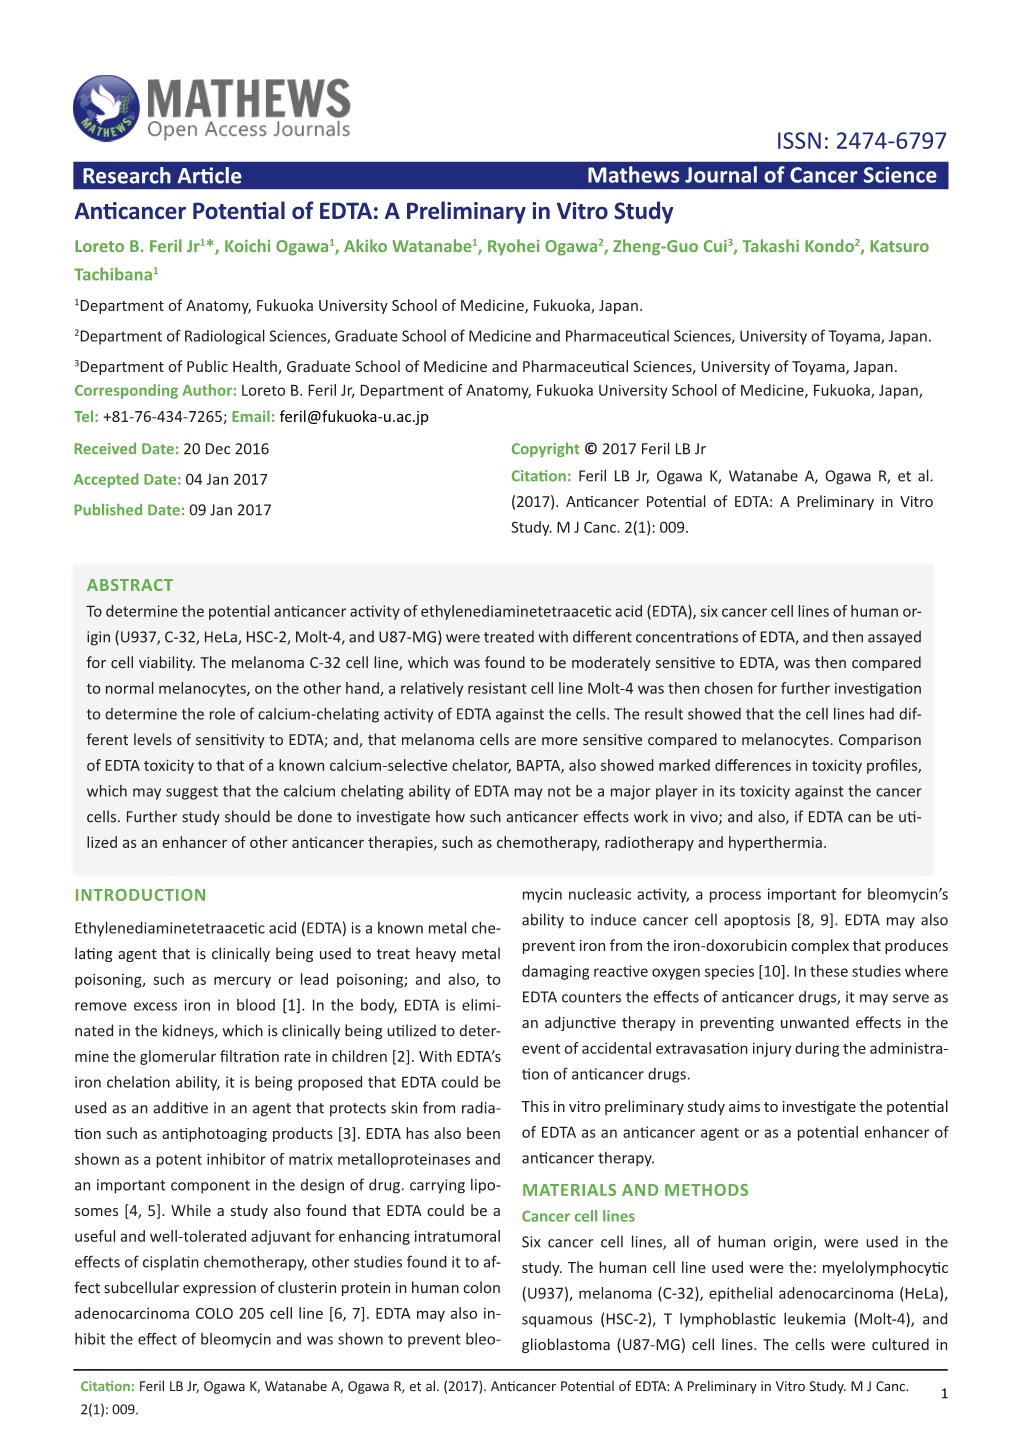 Anticancer Potential of EDTA: a Preliminary in Vitro Study ISSN